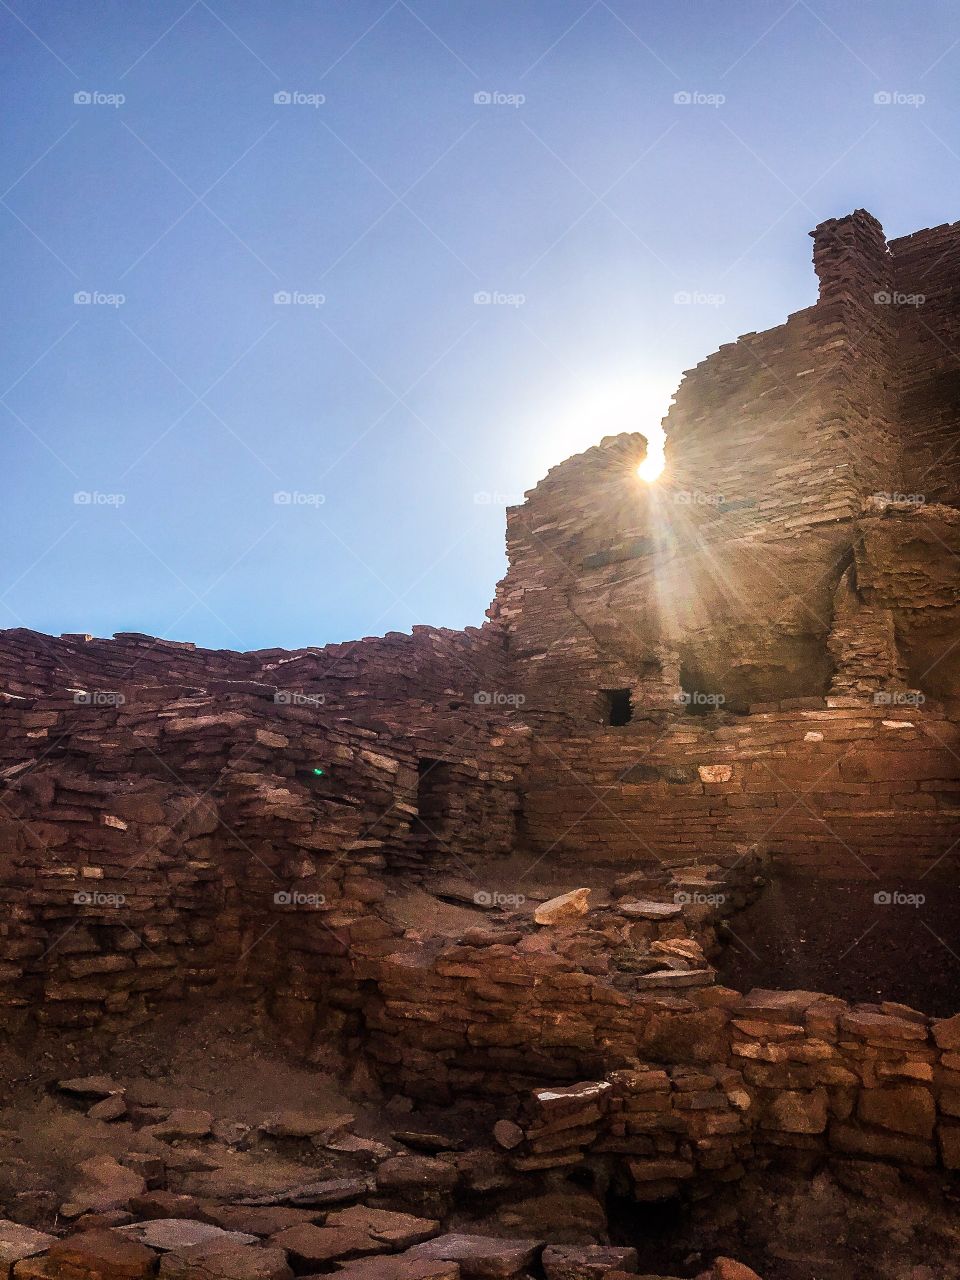 Red rock Pueblo in Arizona with sun shining through gap in rocks